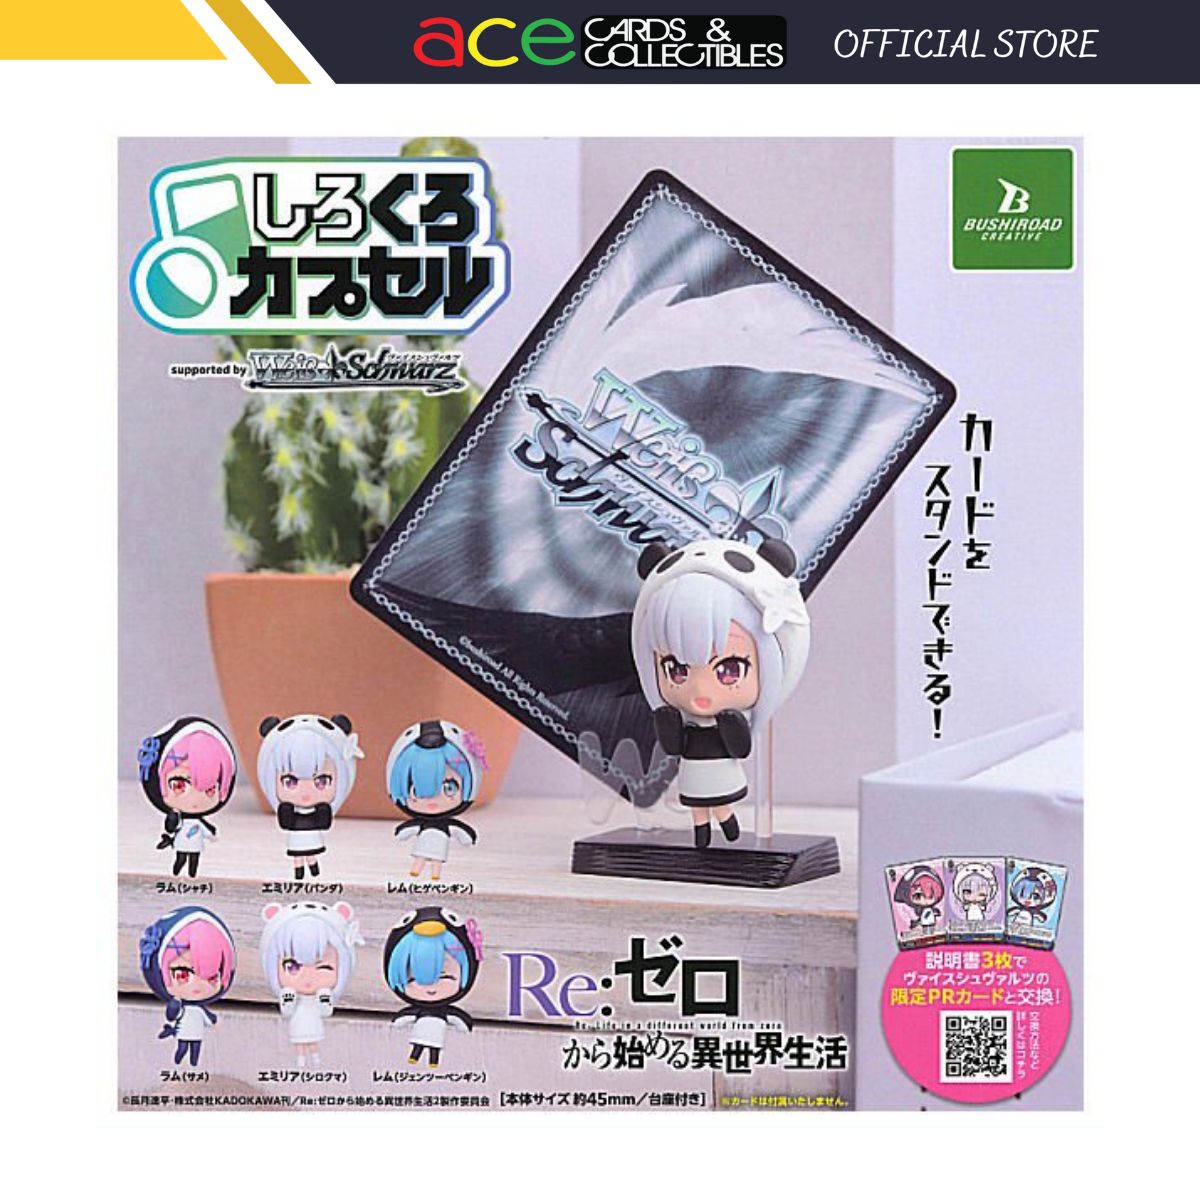 Re:Zero Starting Life In Another World Shirokuro Capsul-Single Box (Random)-Bushiroad Creative-Ace Cards & Collectibles